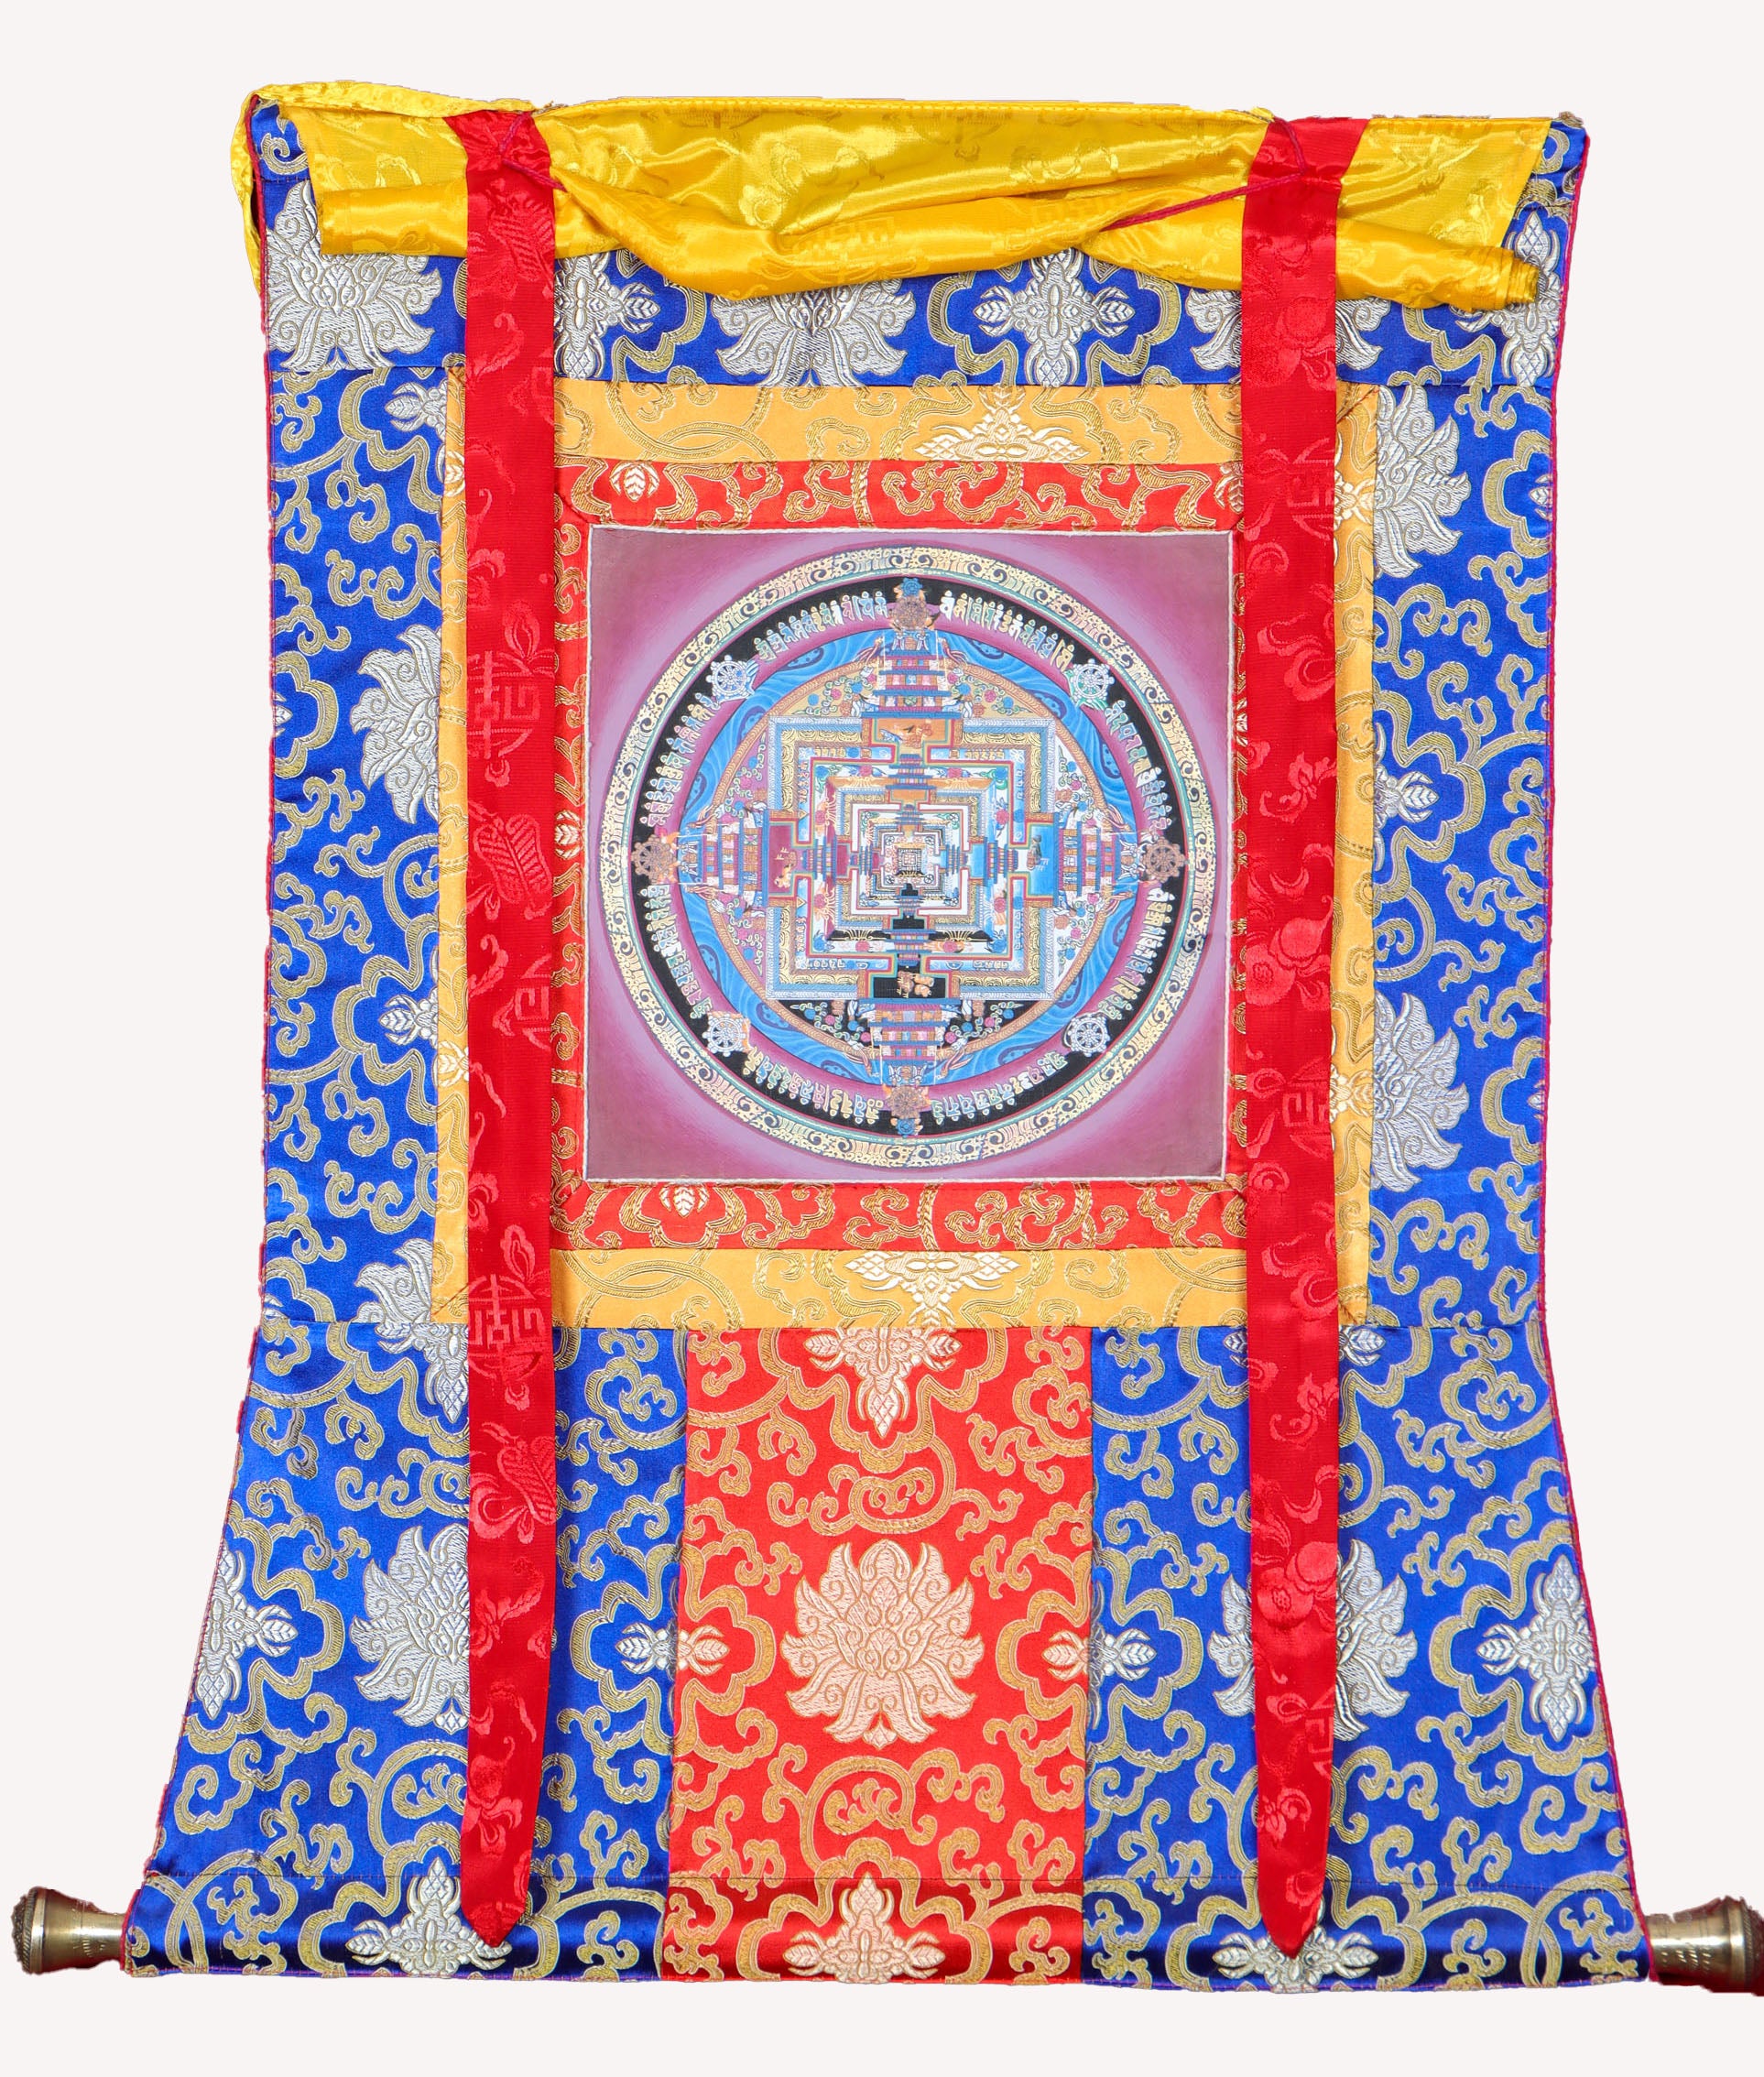 Vajrakilaya Brocade Thangka Painting for devotion, meditation, and ritualistic ceremonies.